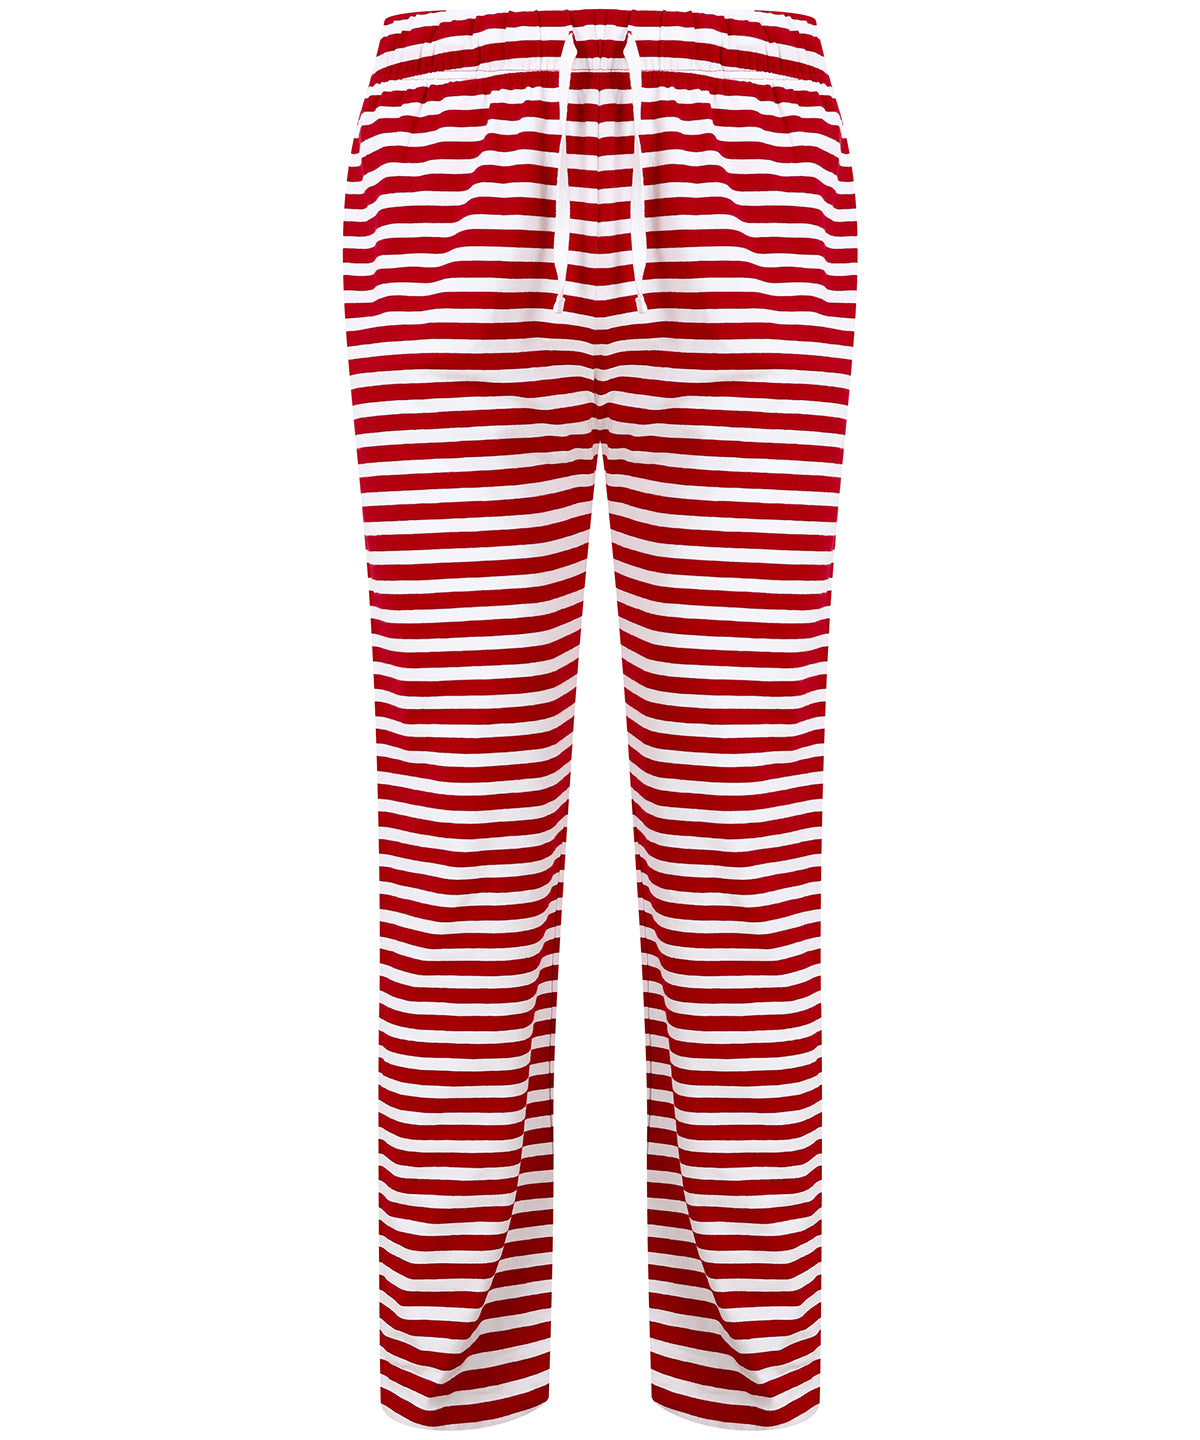 Lounge/Pyjama pants